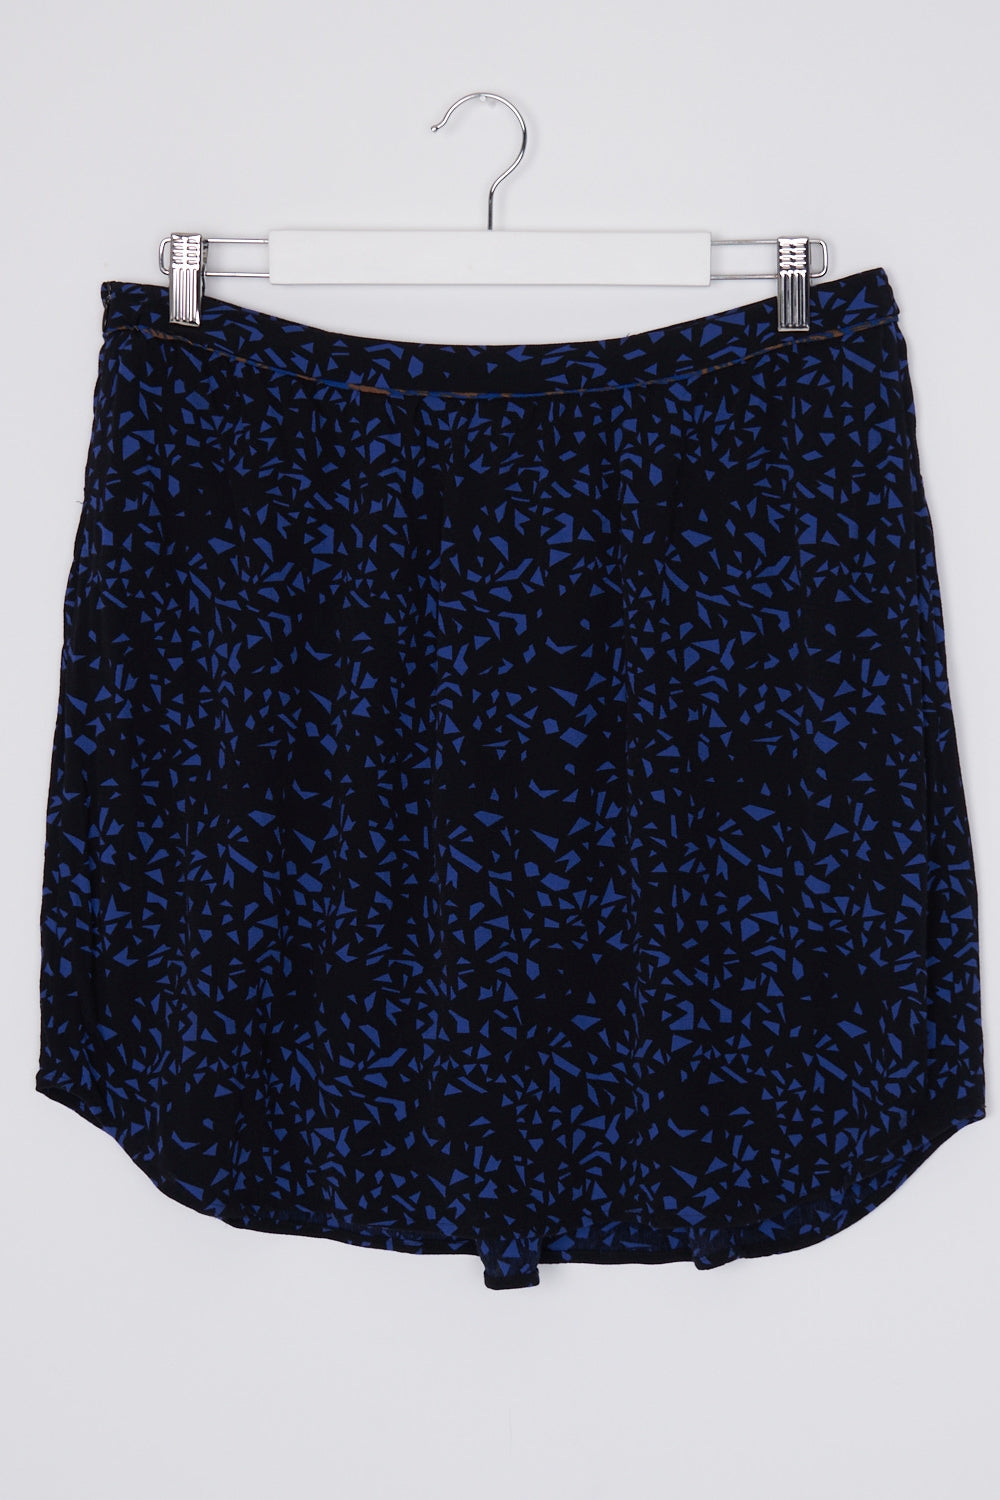 Comptoir Des Cotonniers Black And Blue Patterned Skirt 14